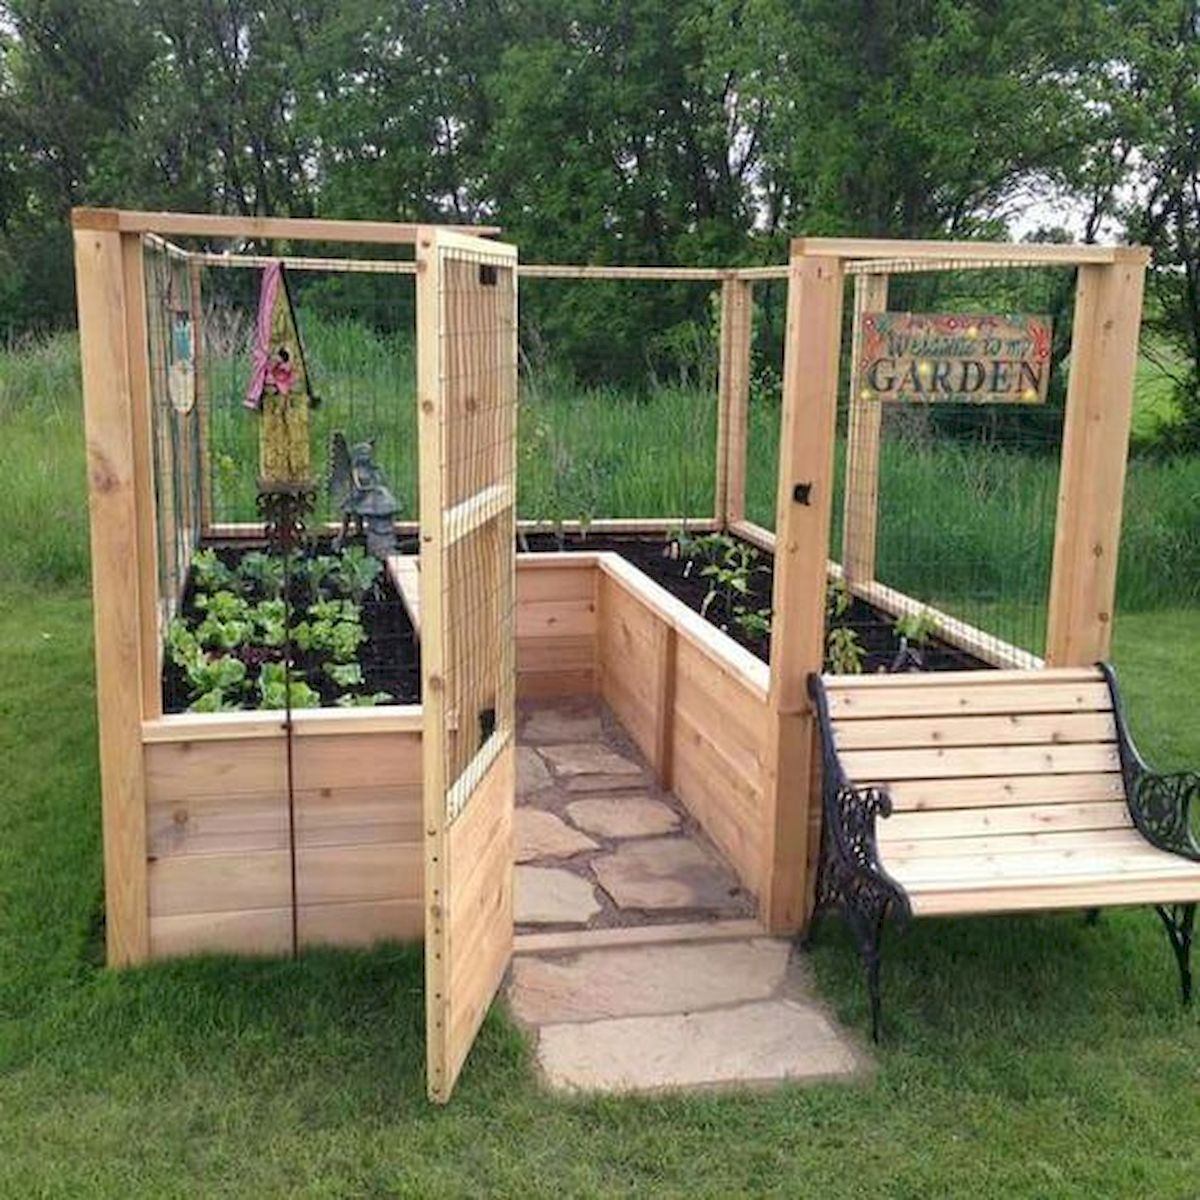 Amazing DIY Raised Garden Beds Ideas